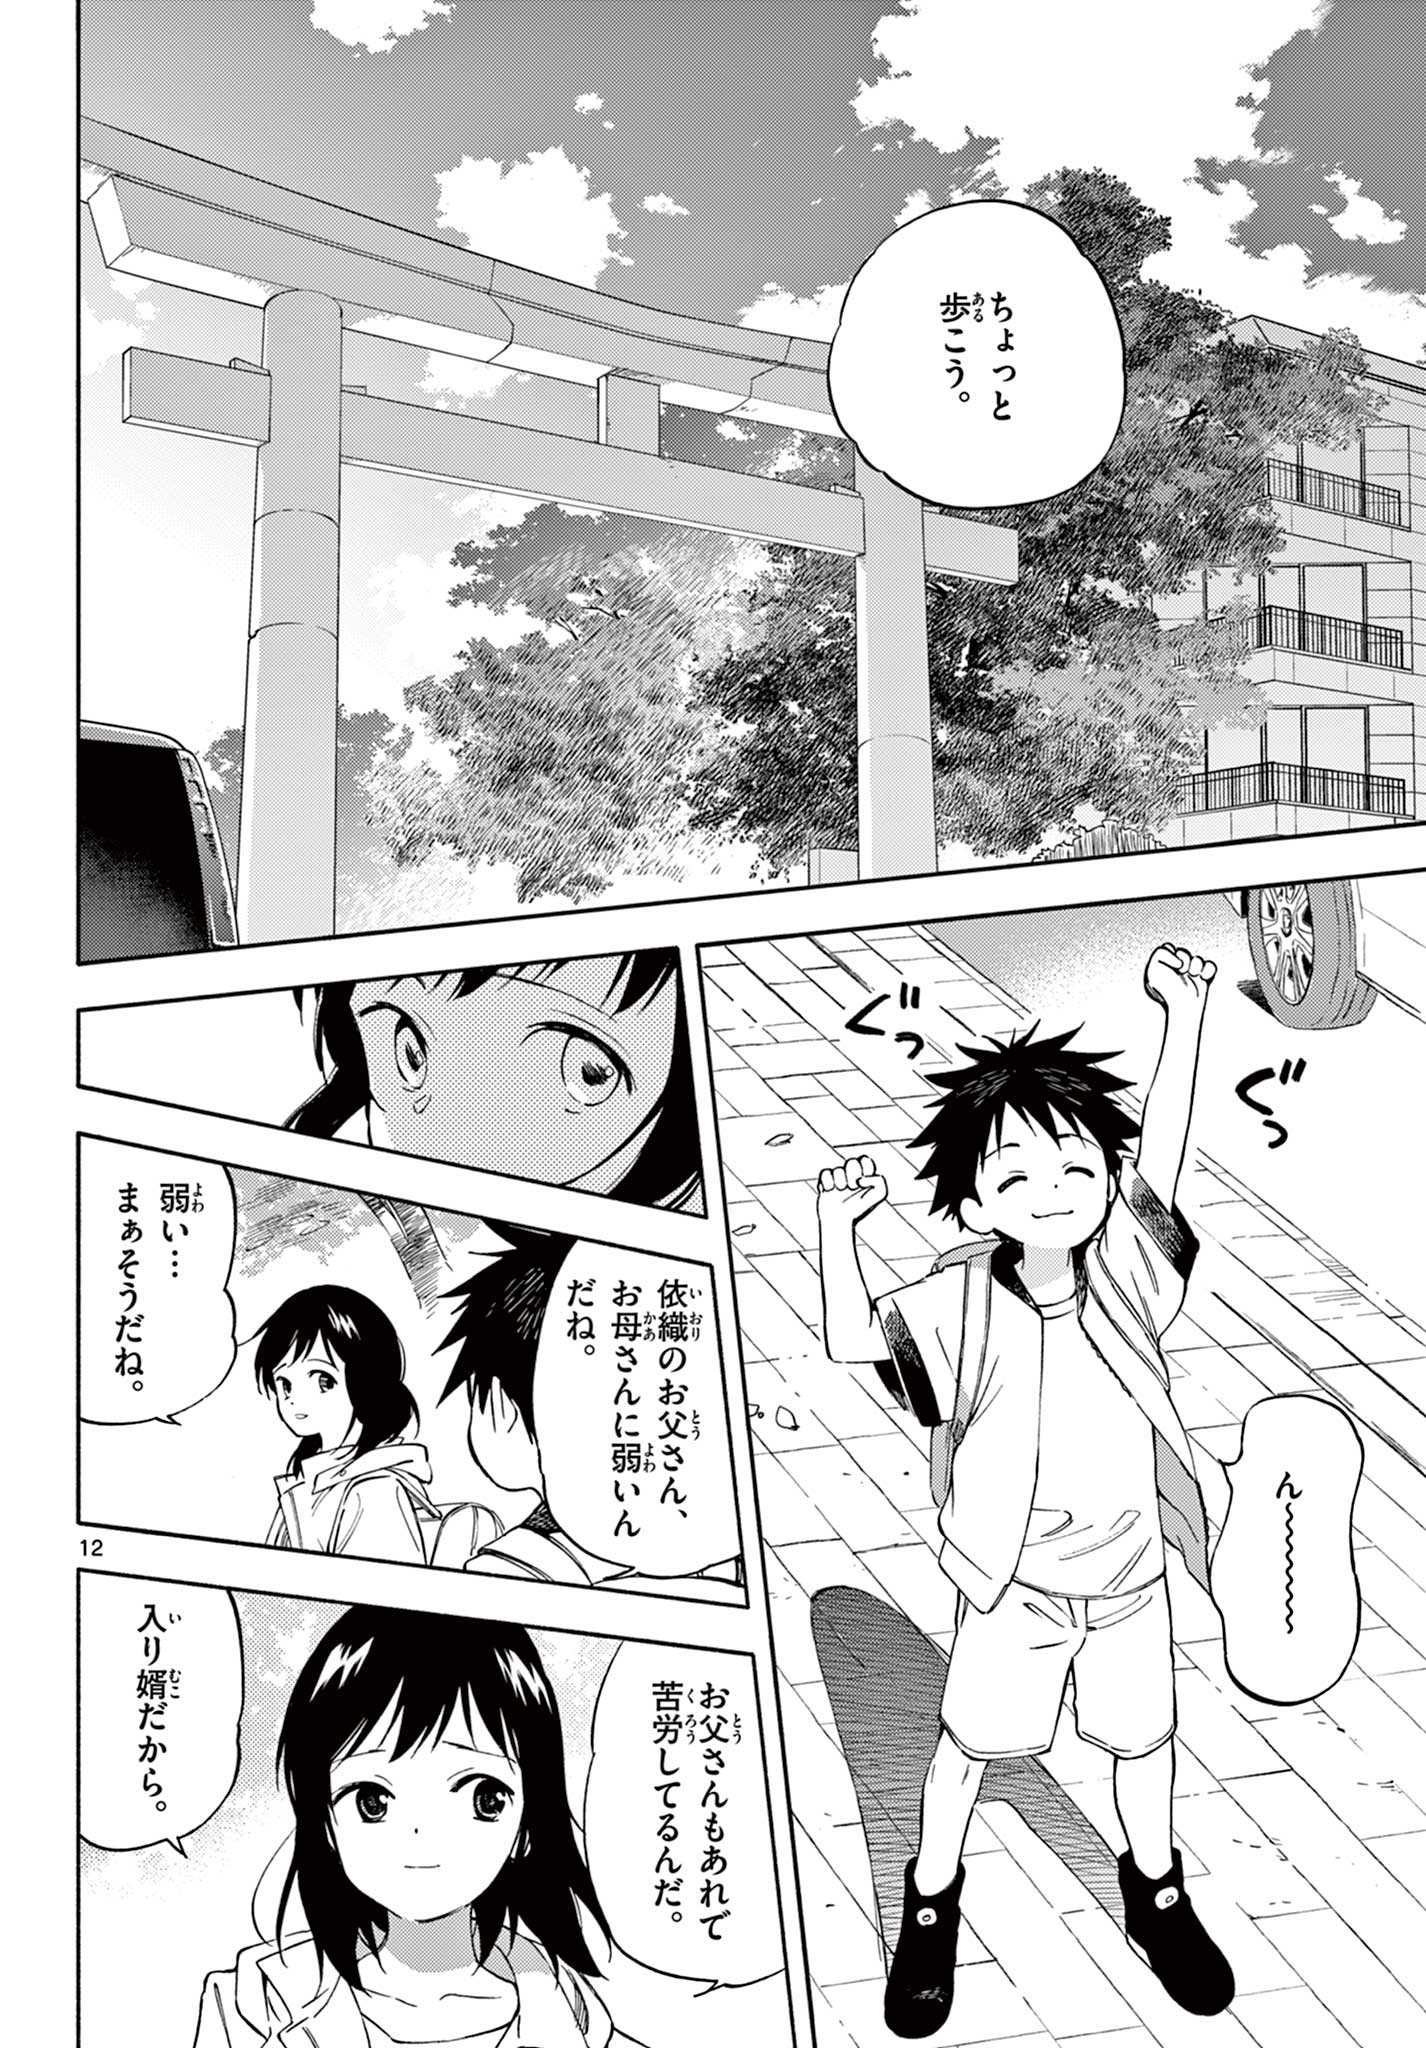 Nami no Shijima no Horizont - Chapter 14.1 - Page 12